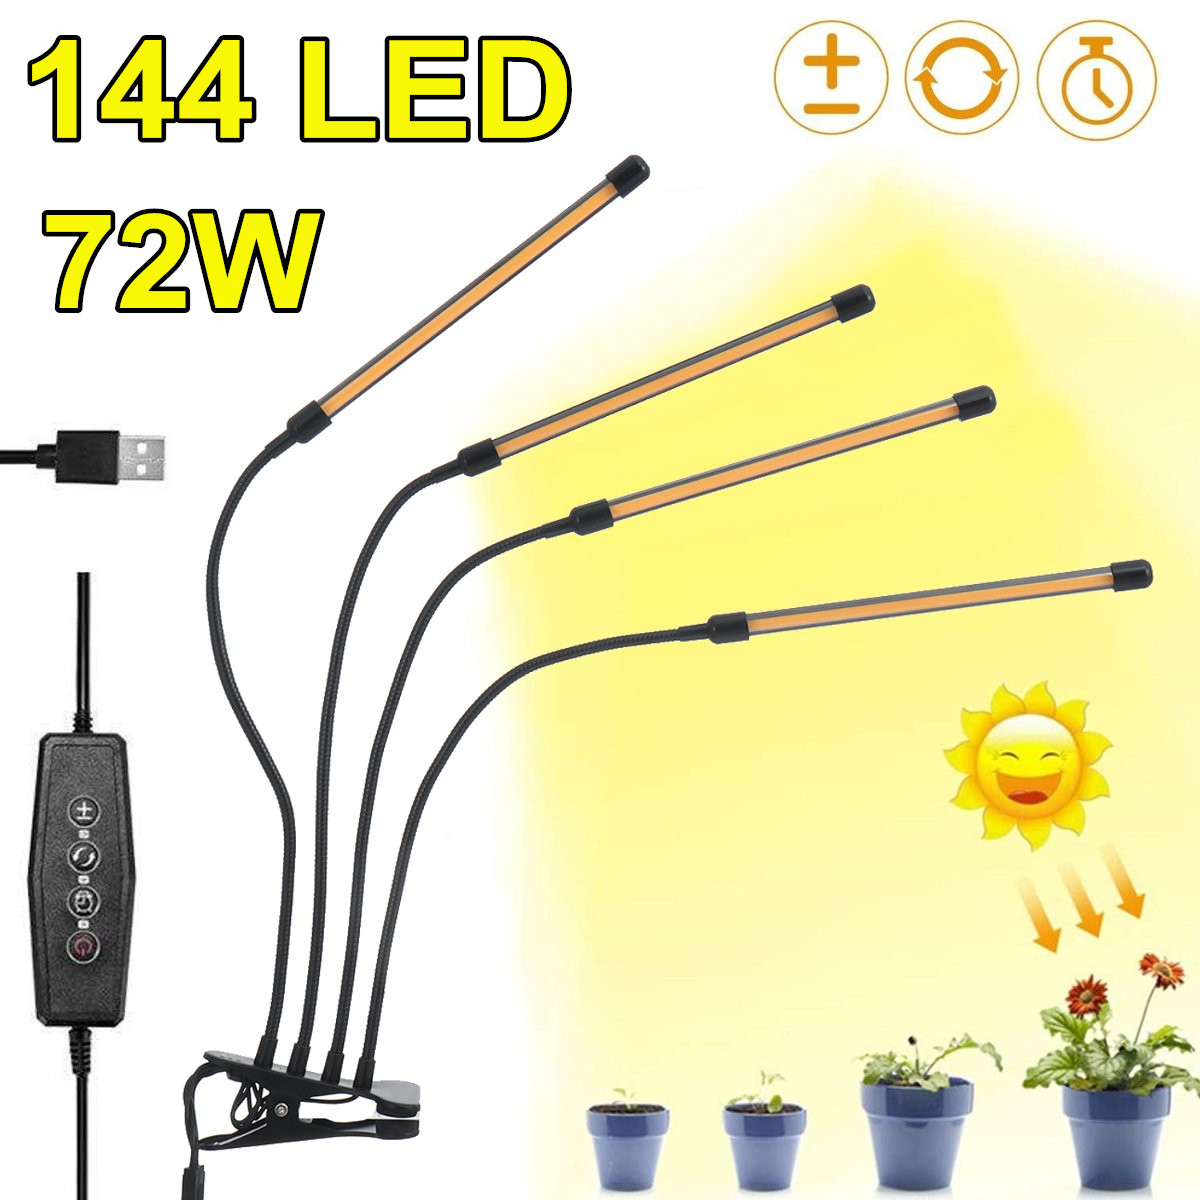 4-Head-144-LED-72W-Plant-Flower-Grow-Light-Lamp-Hydroponics-Full-Spectrum-USB-1727662-1